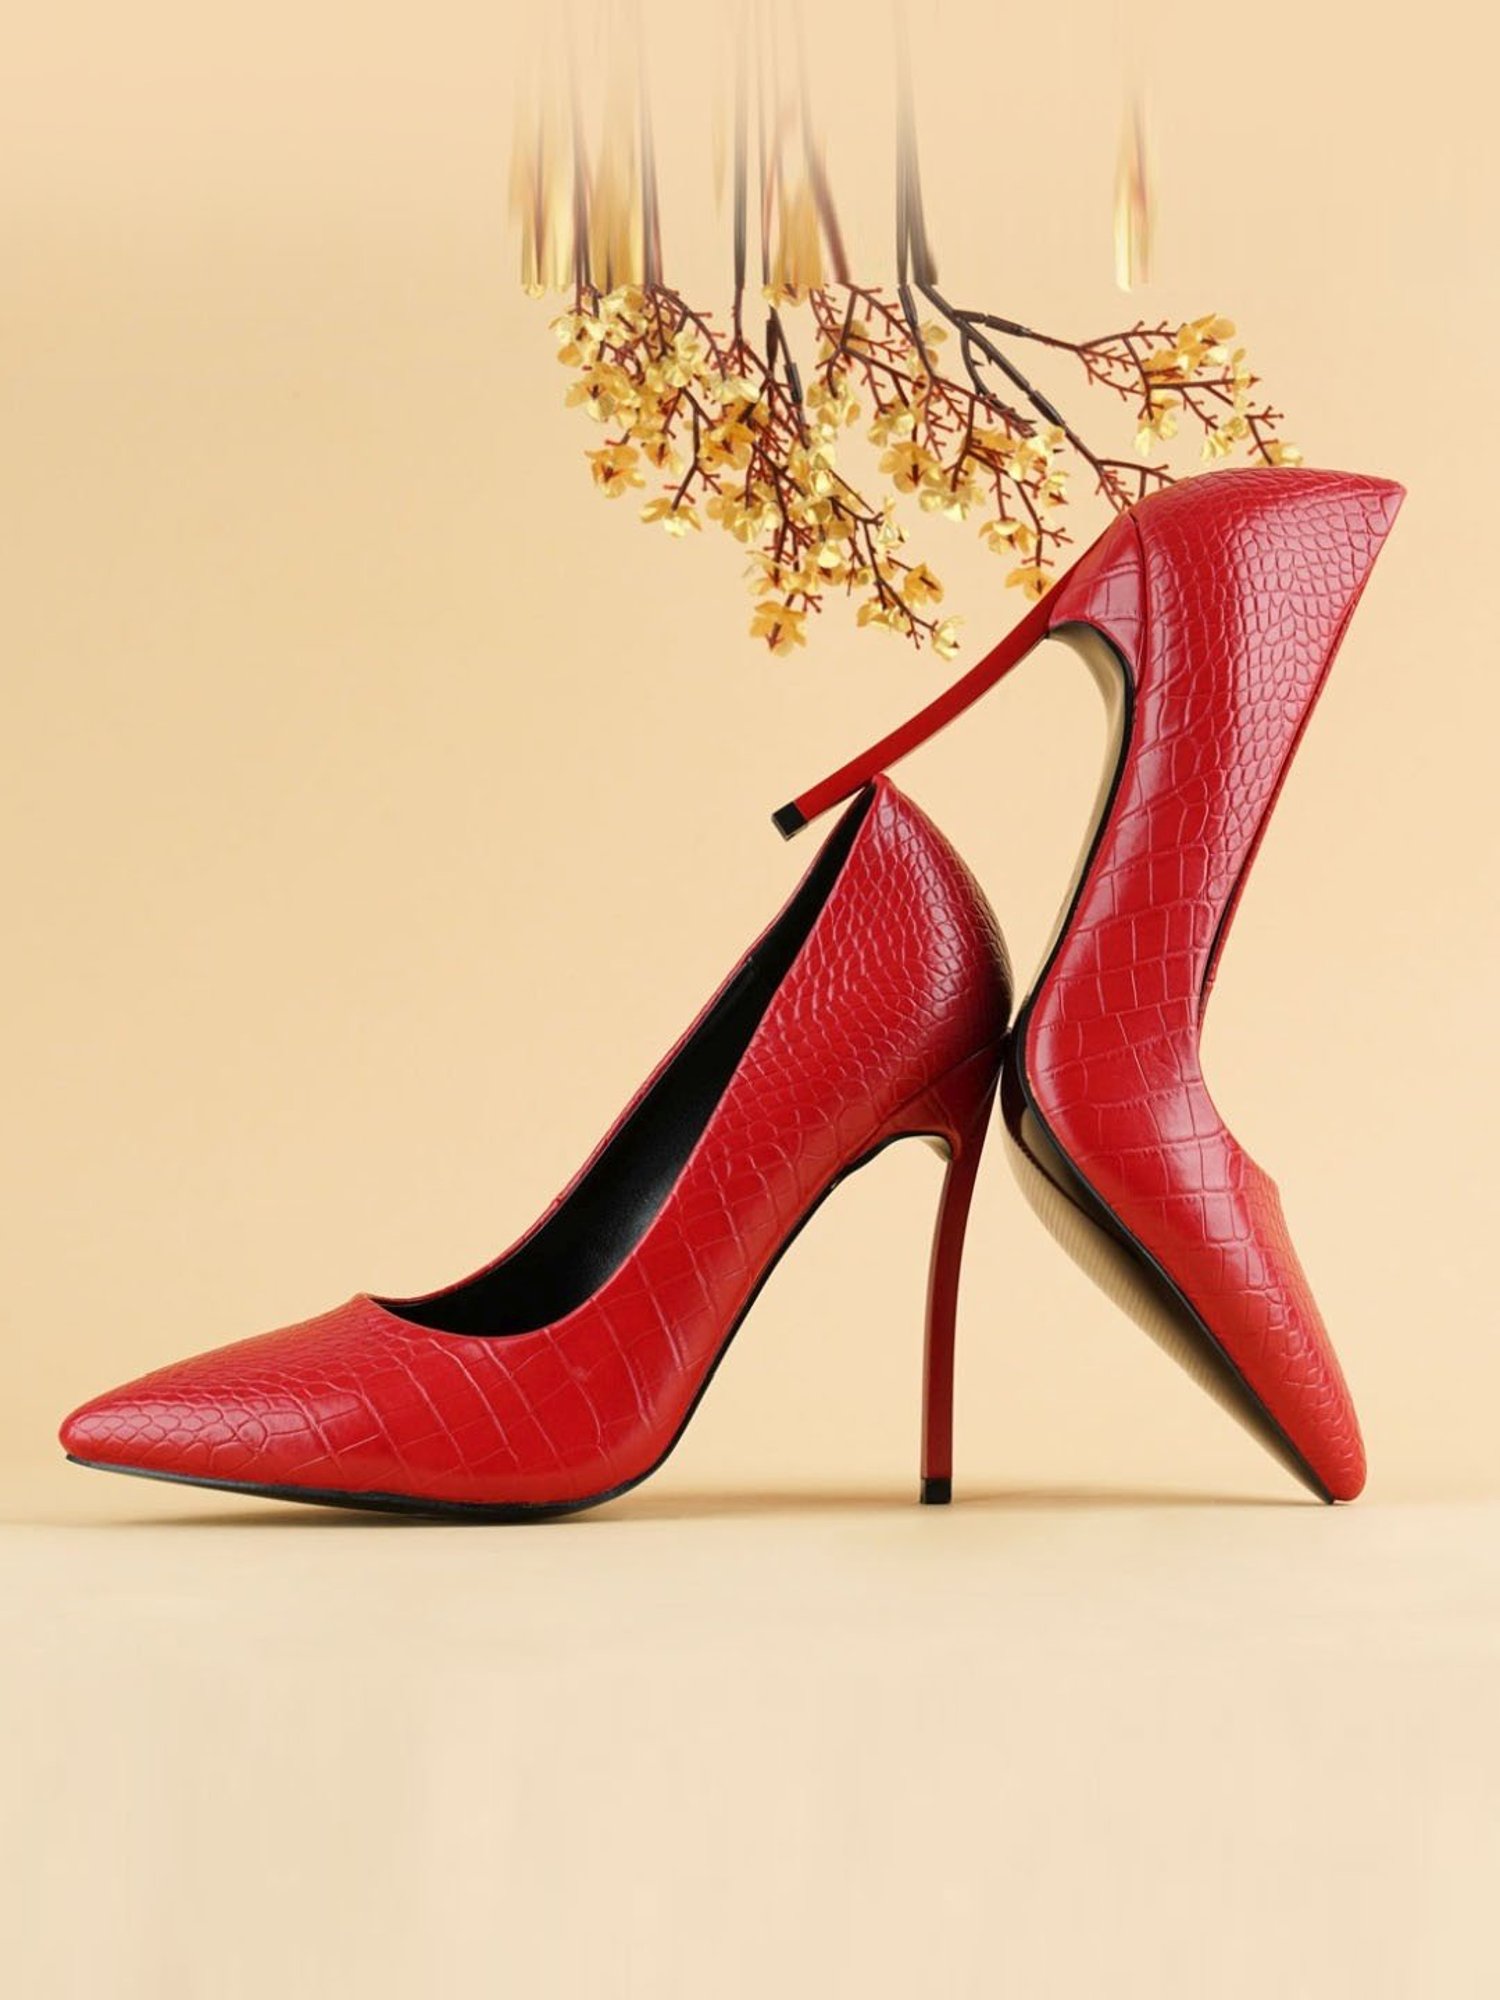 30 Sassy Red Heels Designs To Make A Fashion Statement | Heels, Designer  heels, Heels outfits